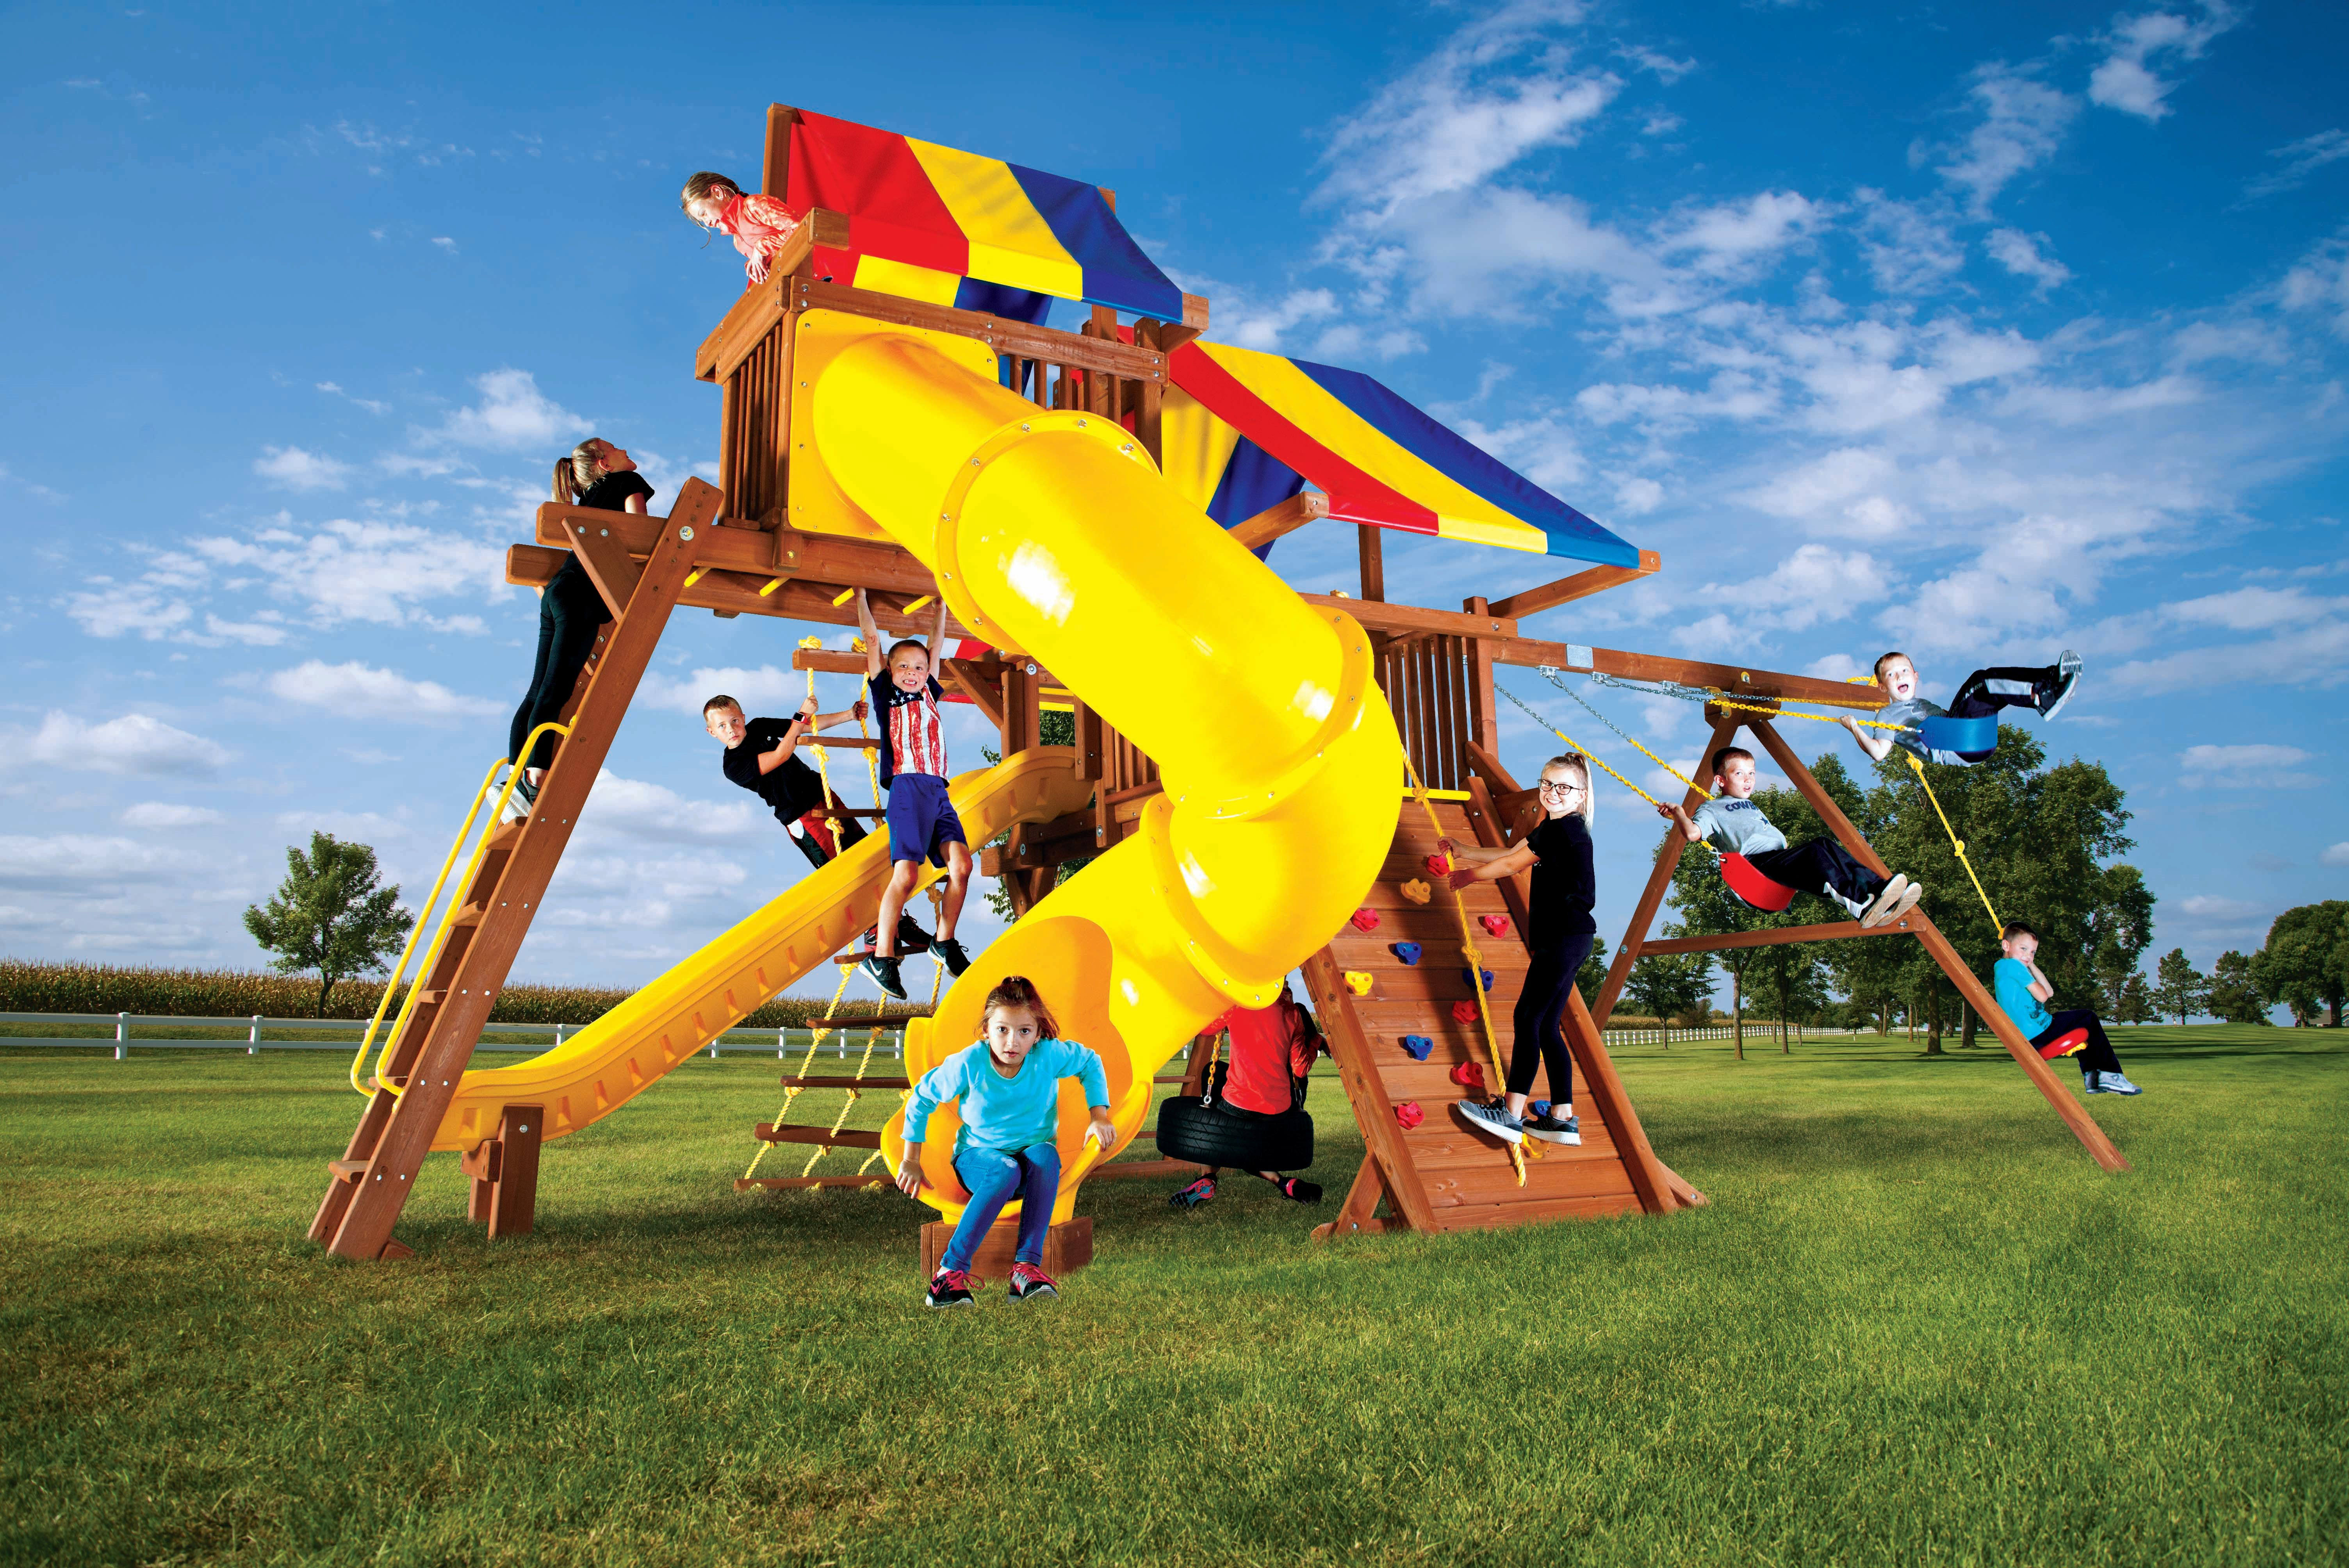 Rainbow Castle Pkg V with 270˚ Spiral Slide (19G) - Rainbow Play Systems of Texas